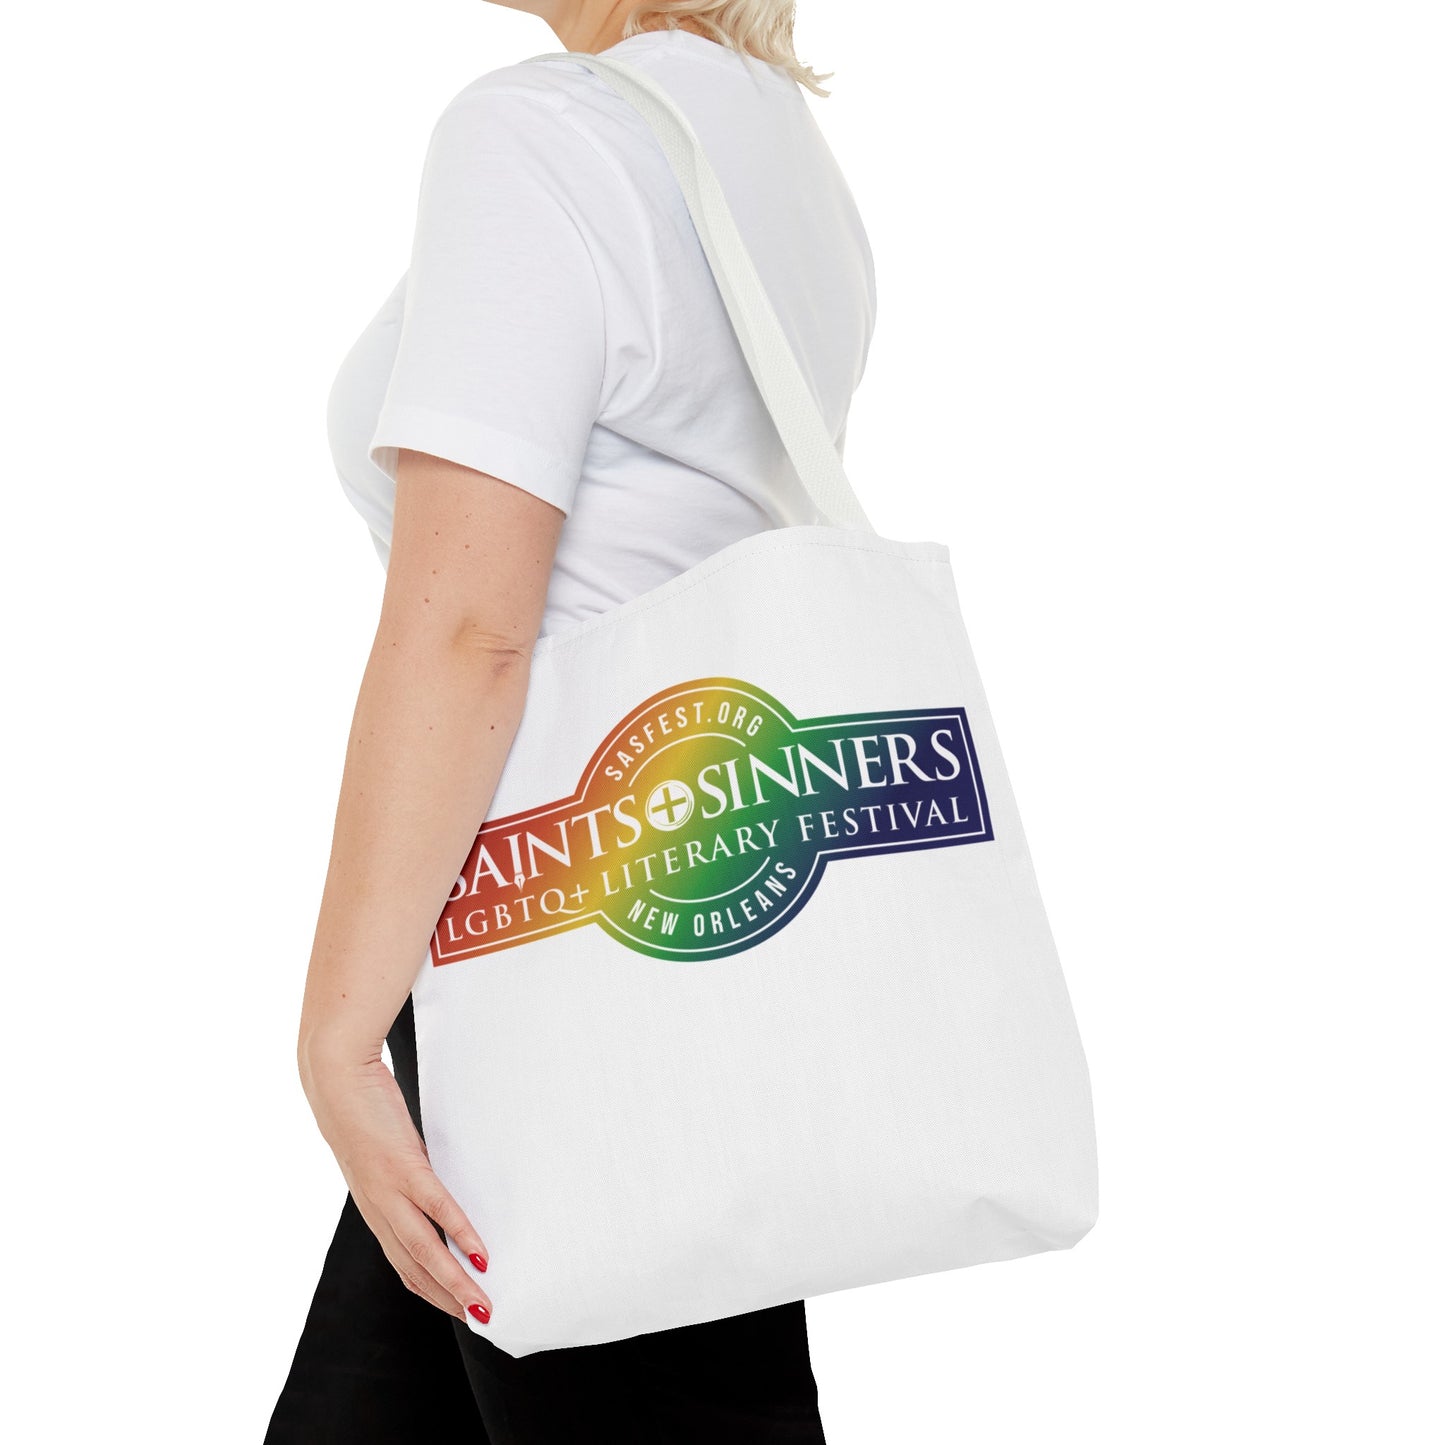 Saints & Sinners Rainbow Logo Tote Bag